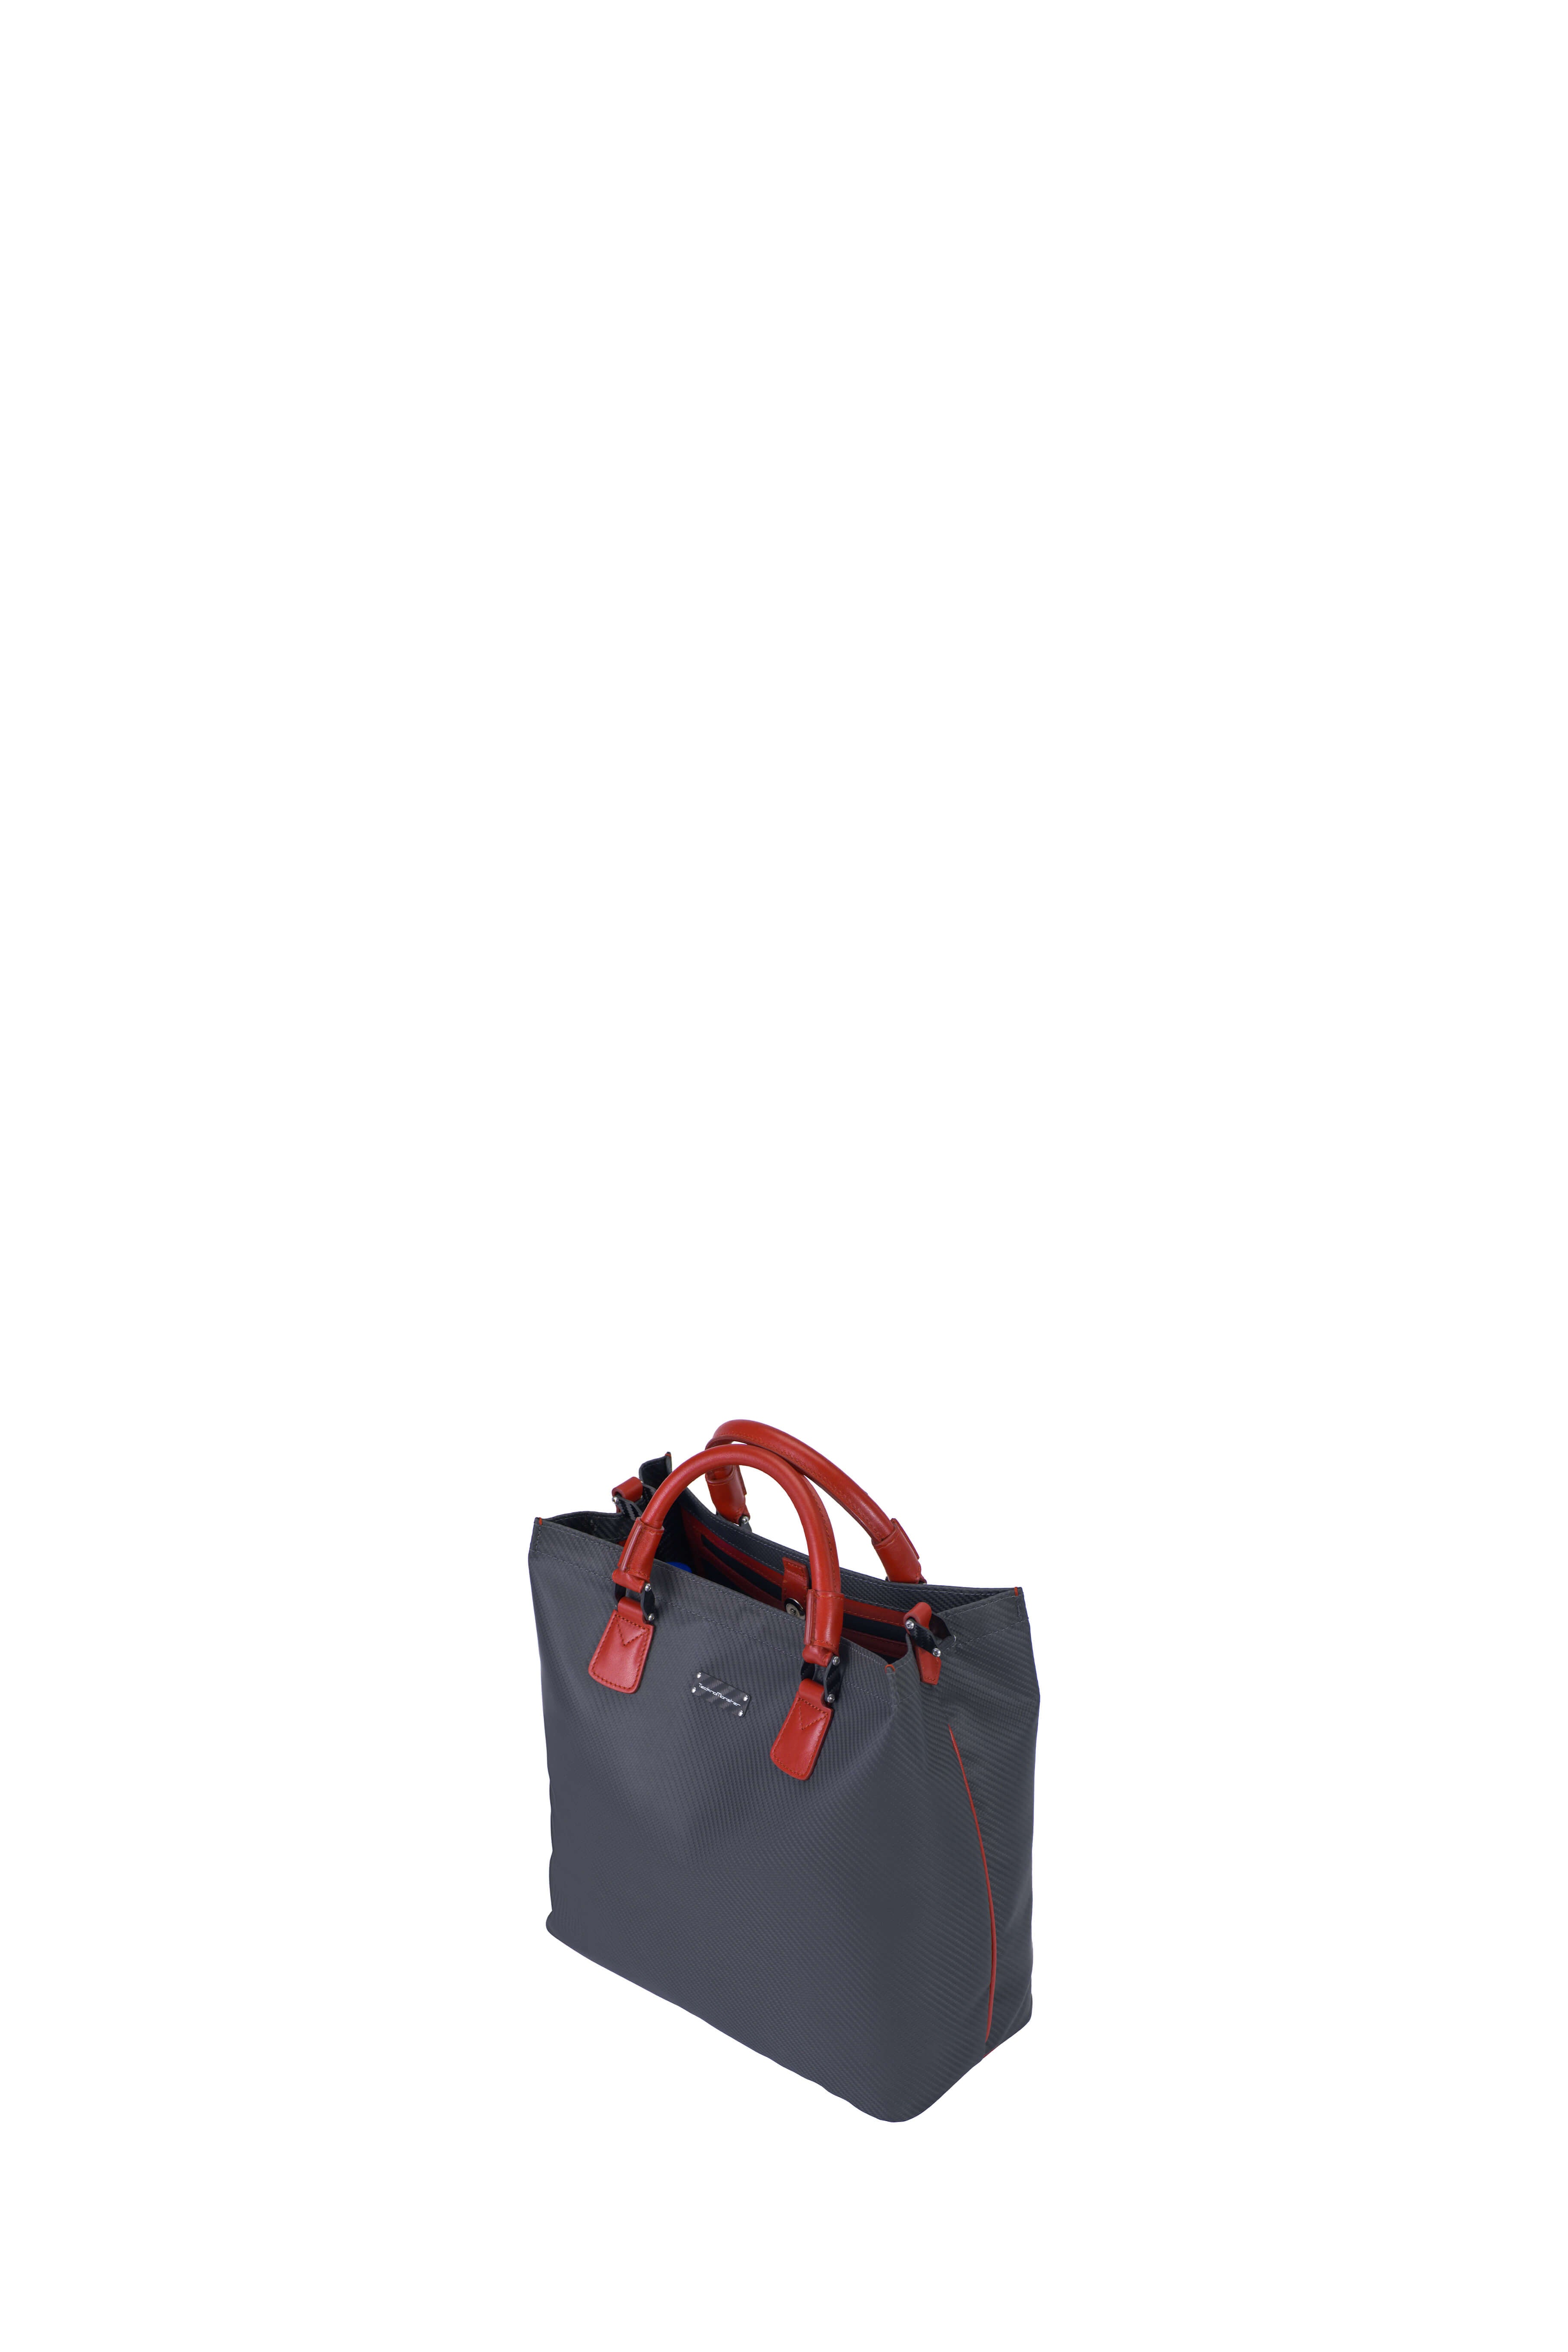 Makne V Soft Carbon Fiber Tote Bag, Red